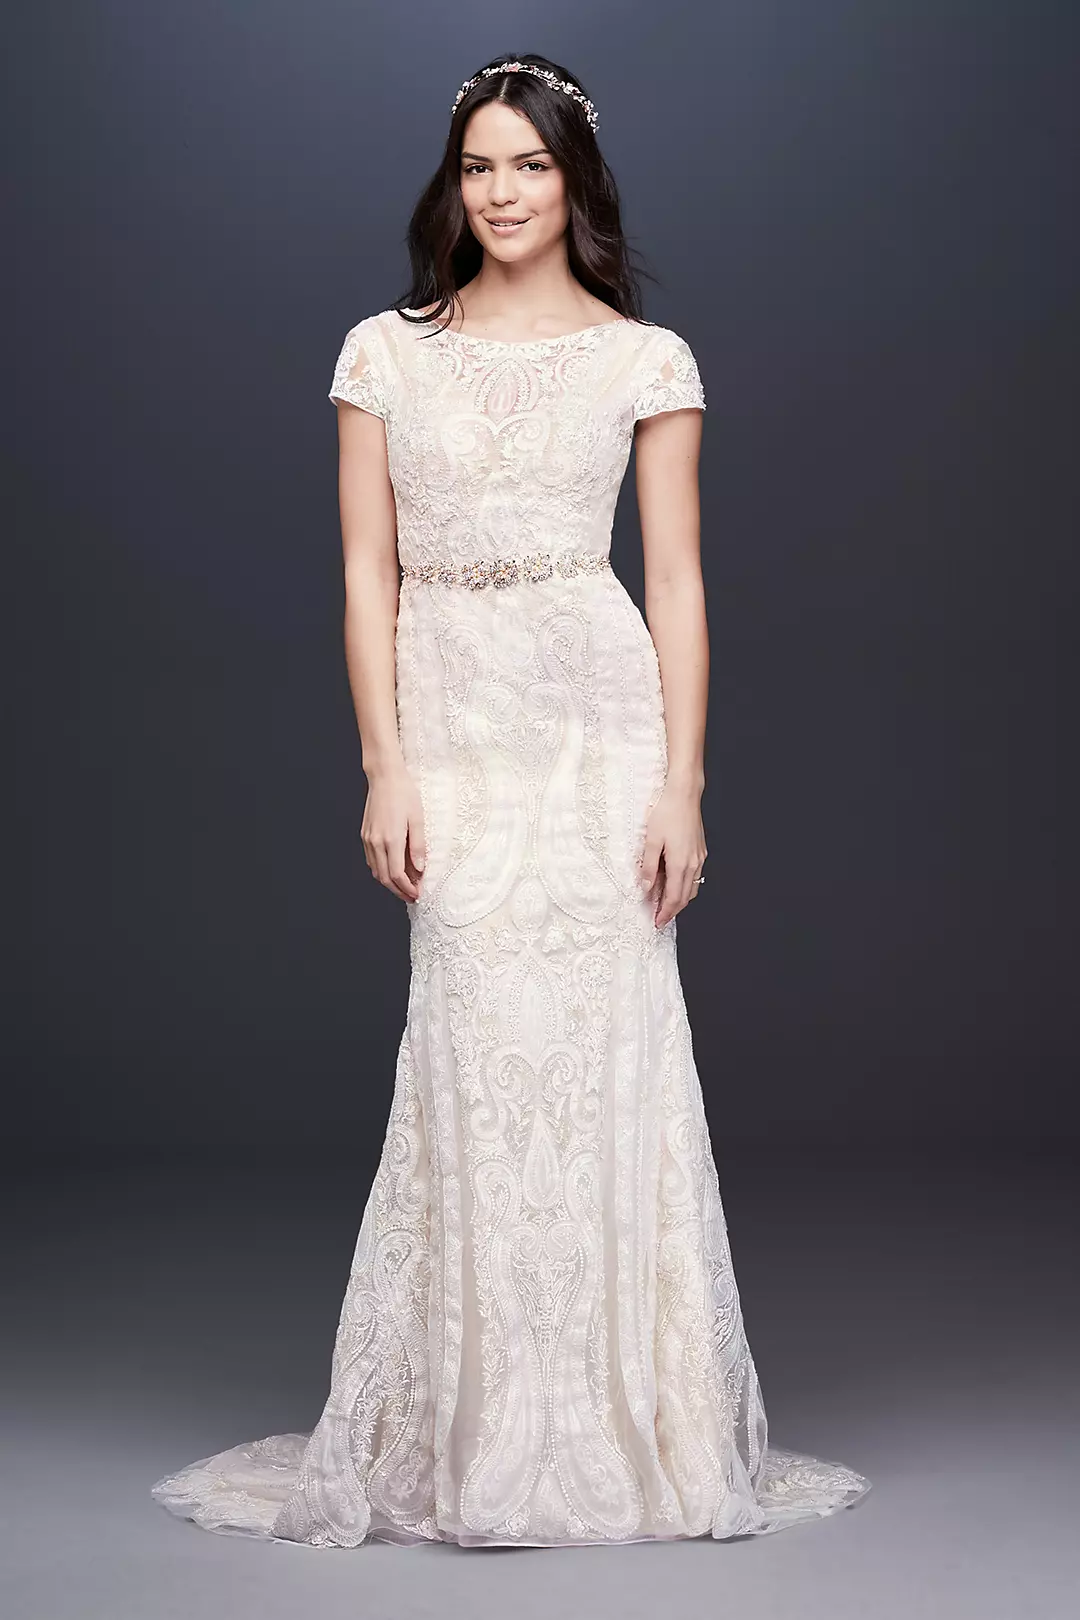 As-Is Laser-Cut Illusion Cap Sleeve Wedding Dress Image